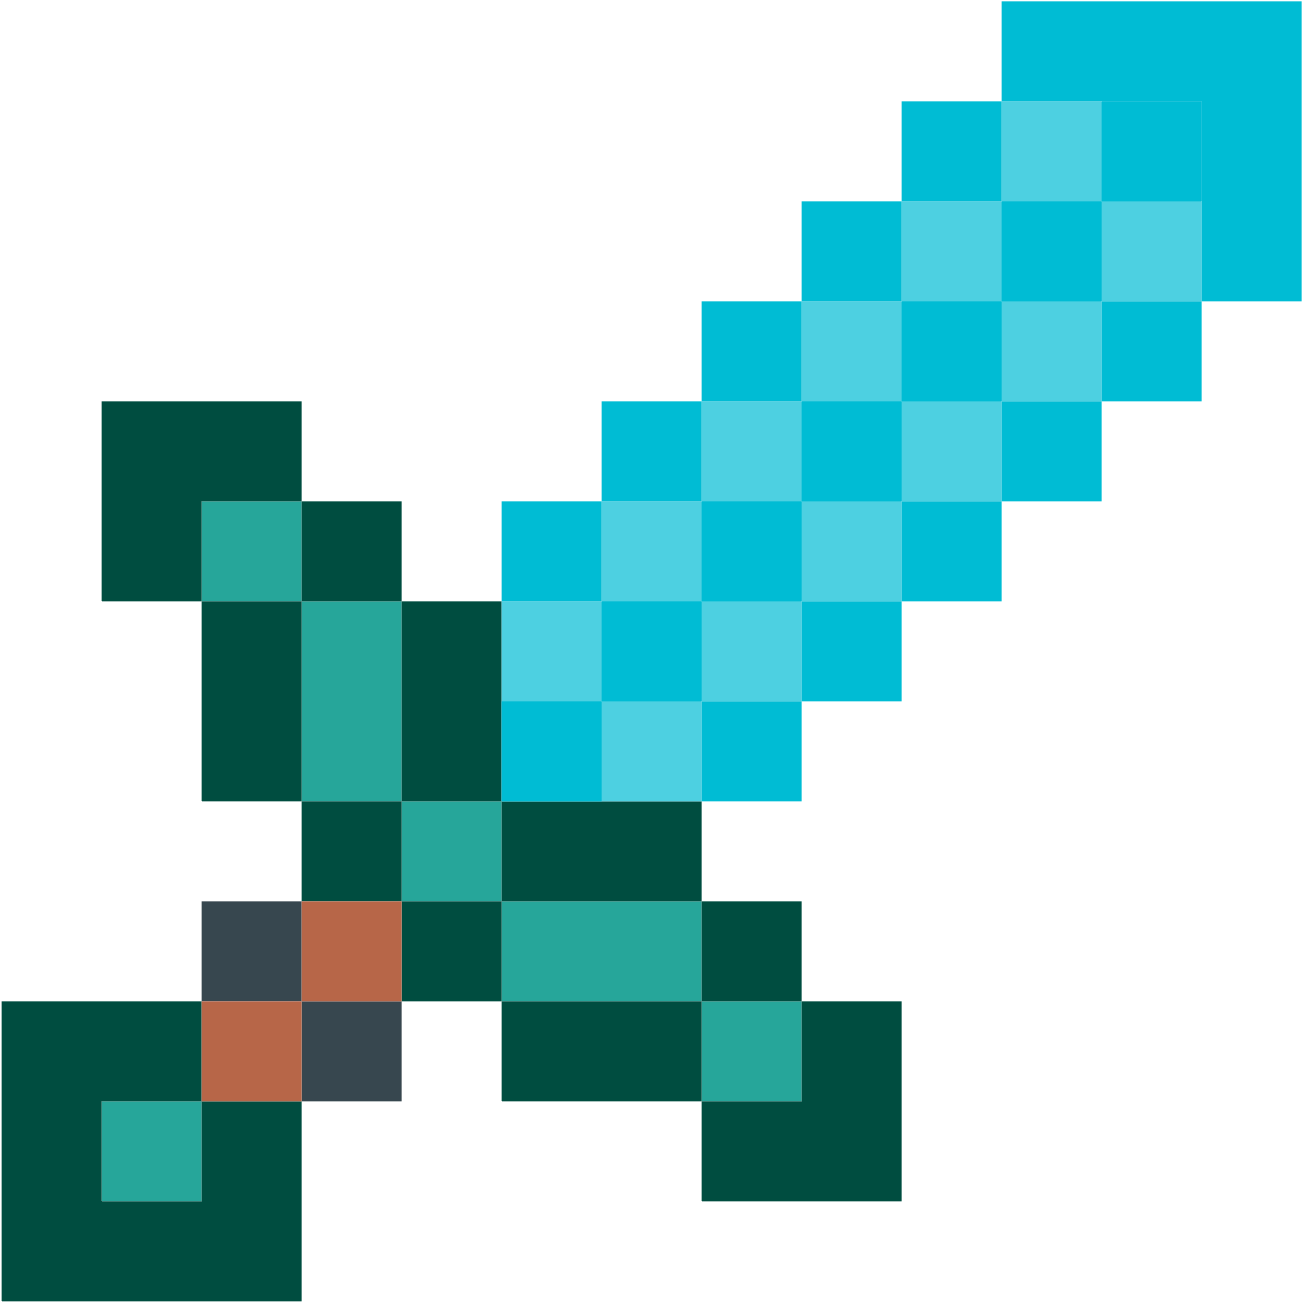 Broken Sword To My Swords Gallery - Minecraft Sword Png, Transparent Png,  png download, transparent png image